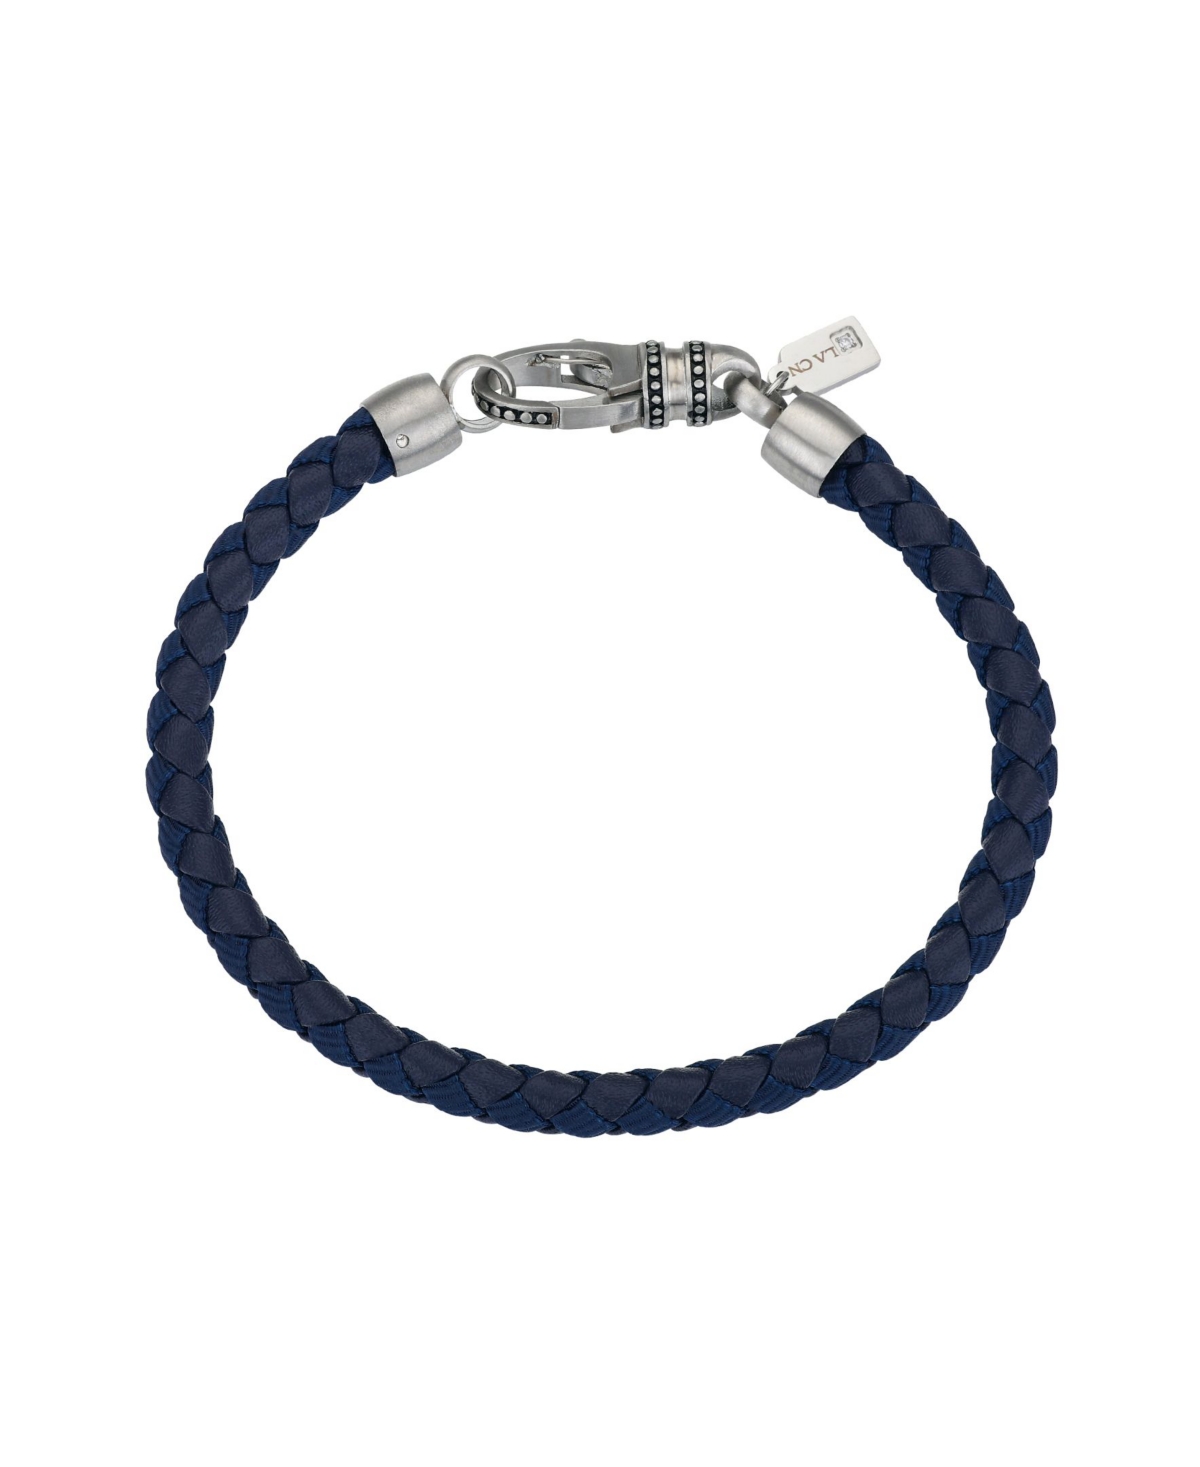 Men's Stainless Steel Leather Bracelet - Blue